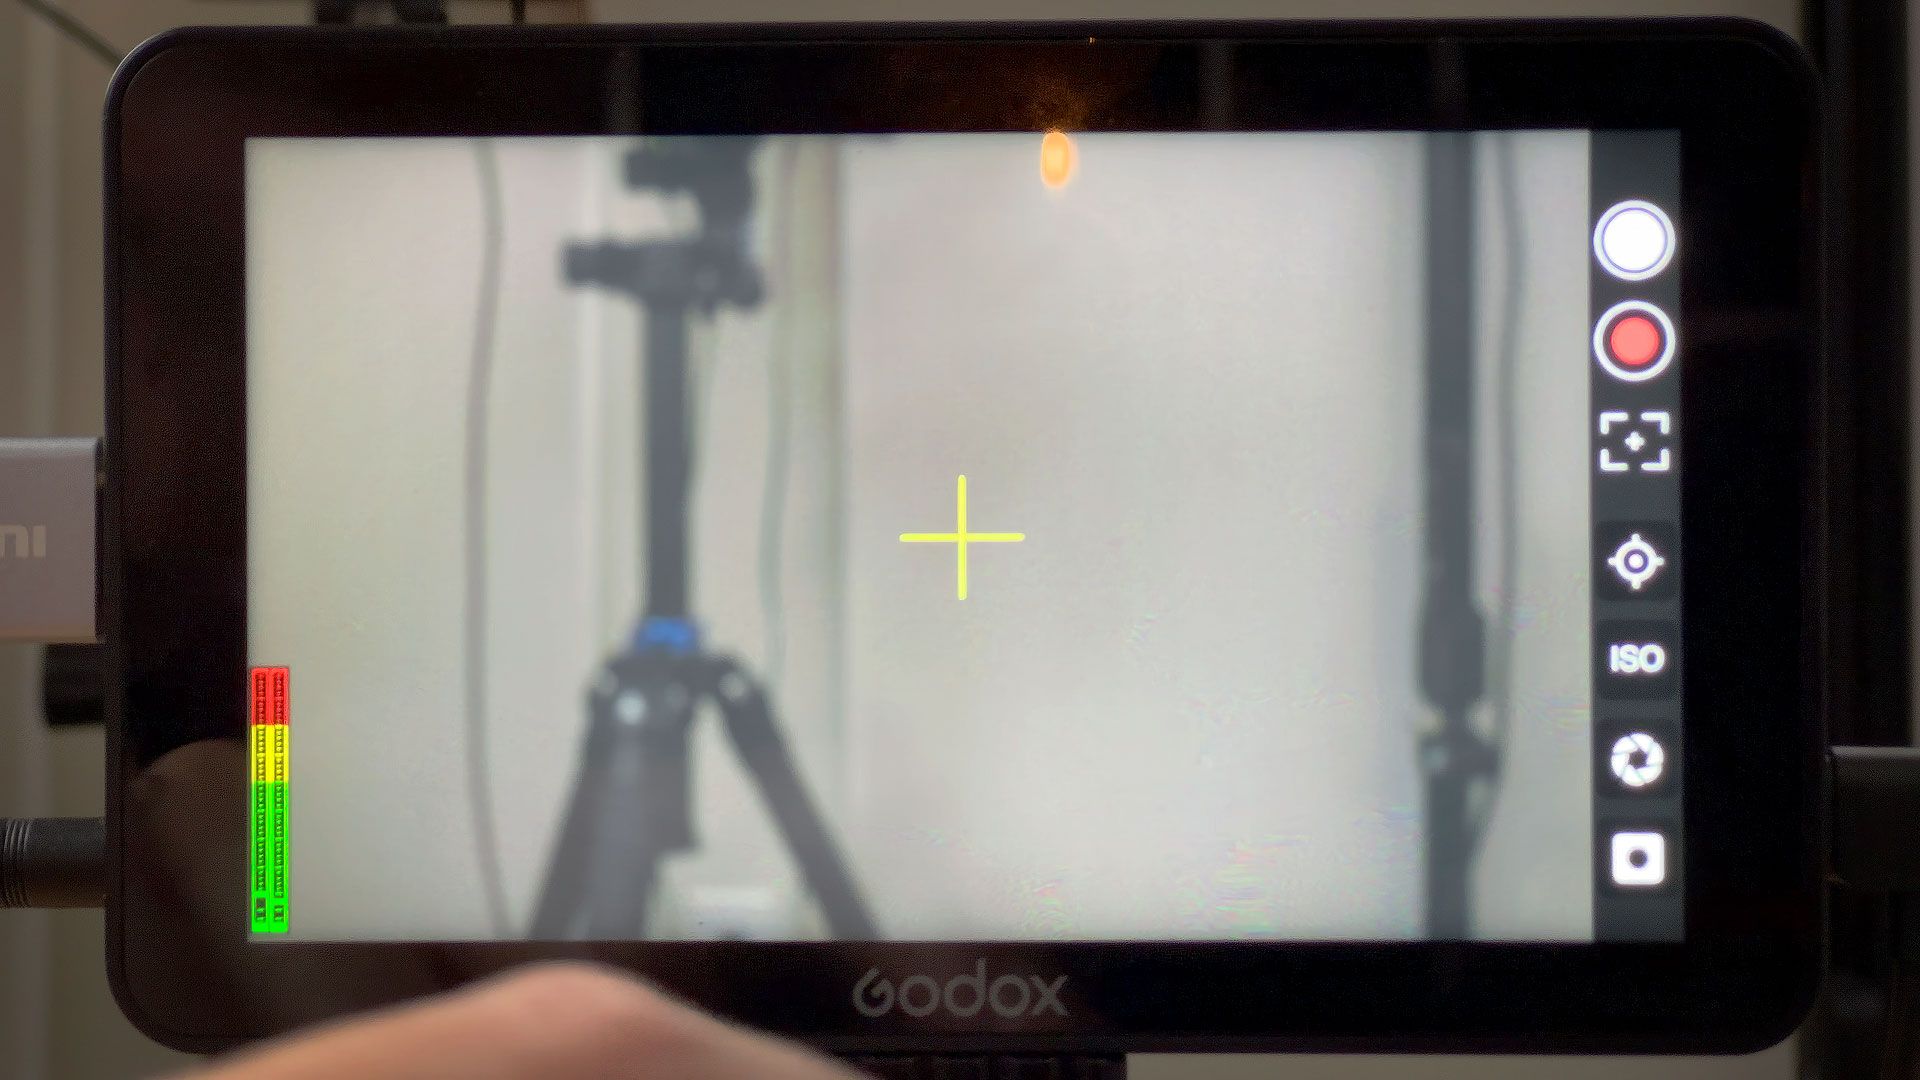 Camera controls on the Godox GM6S monitor